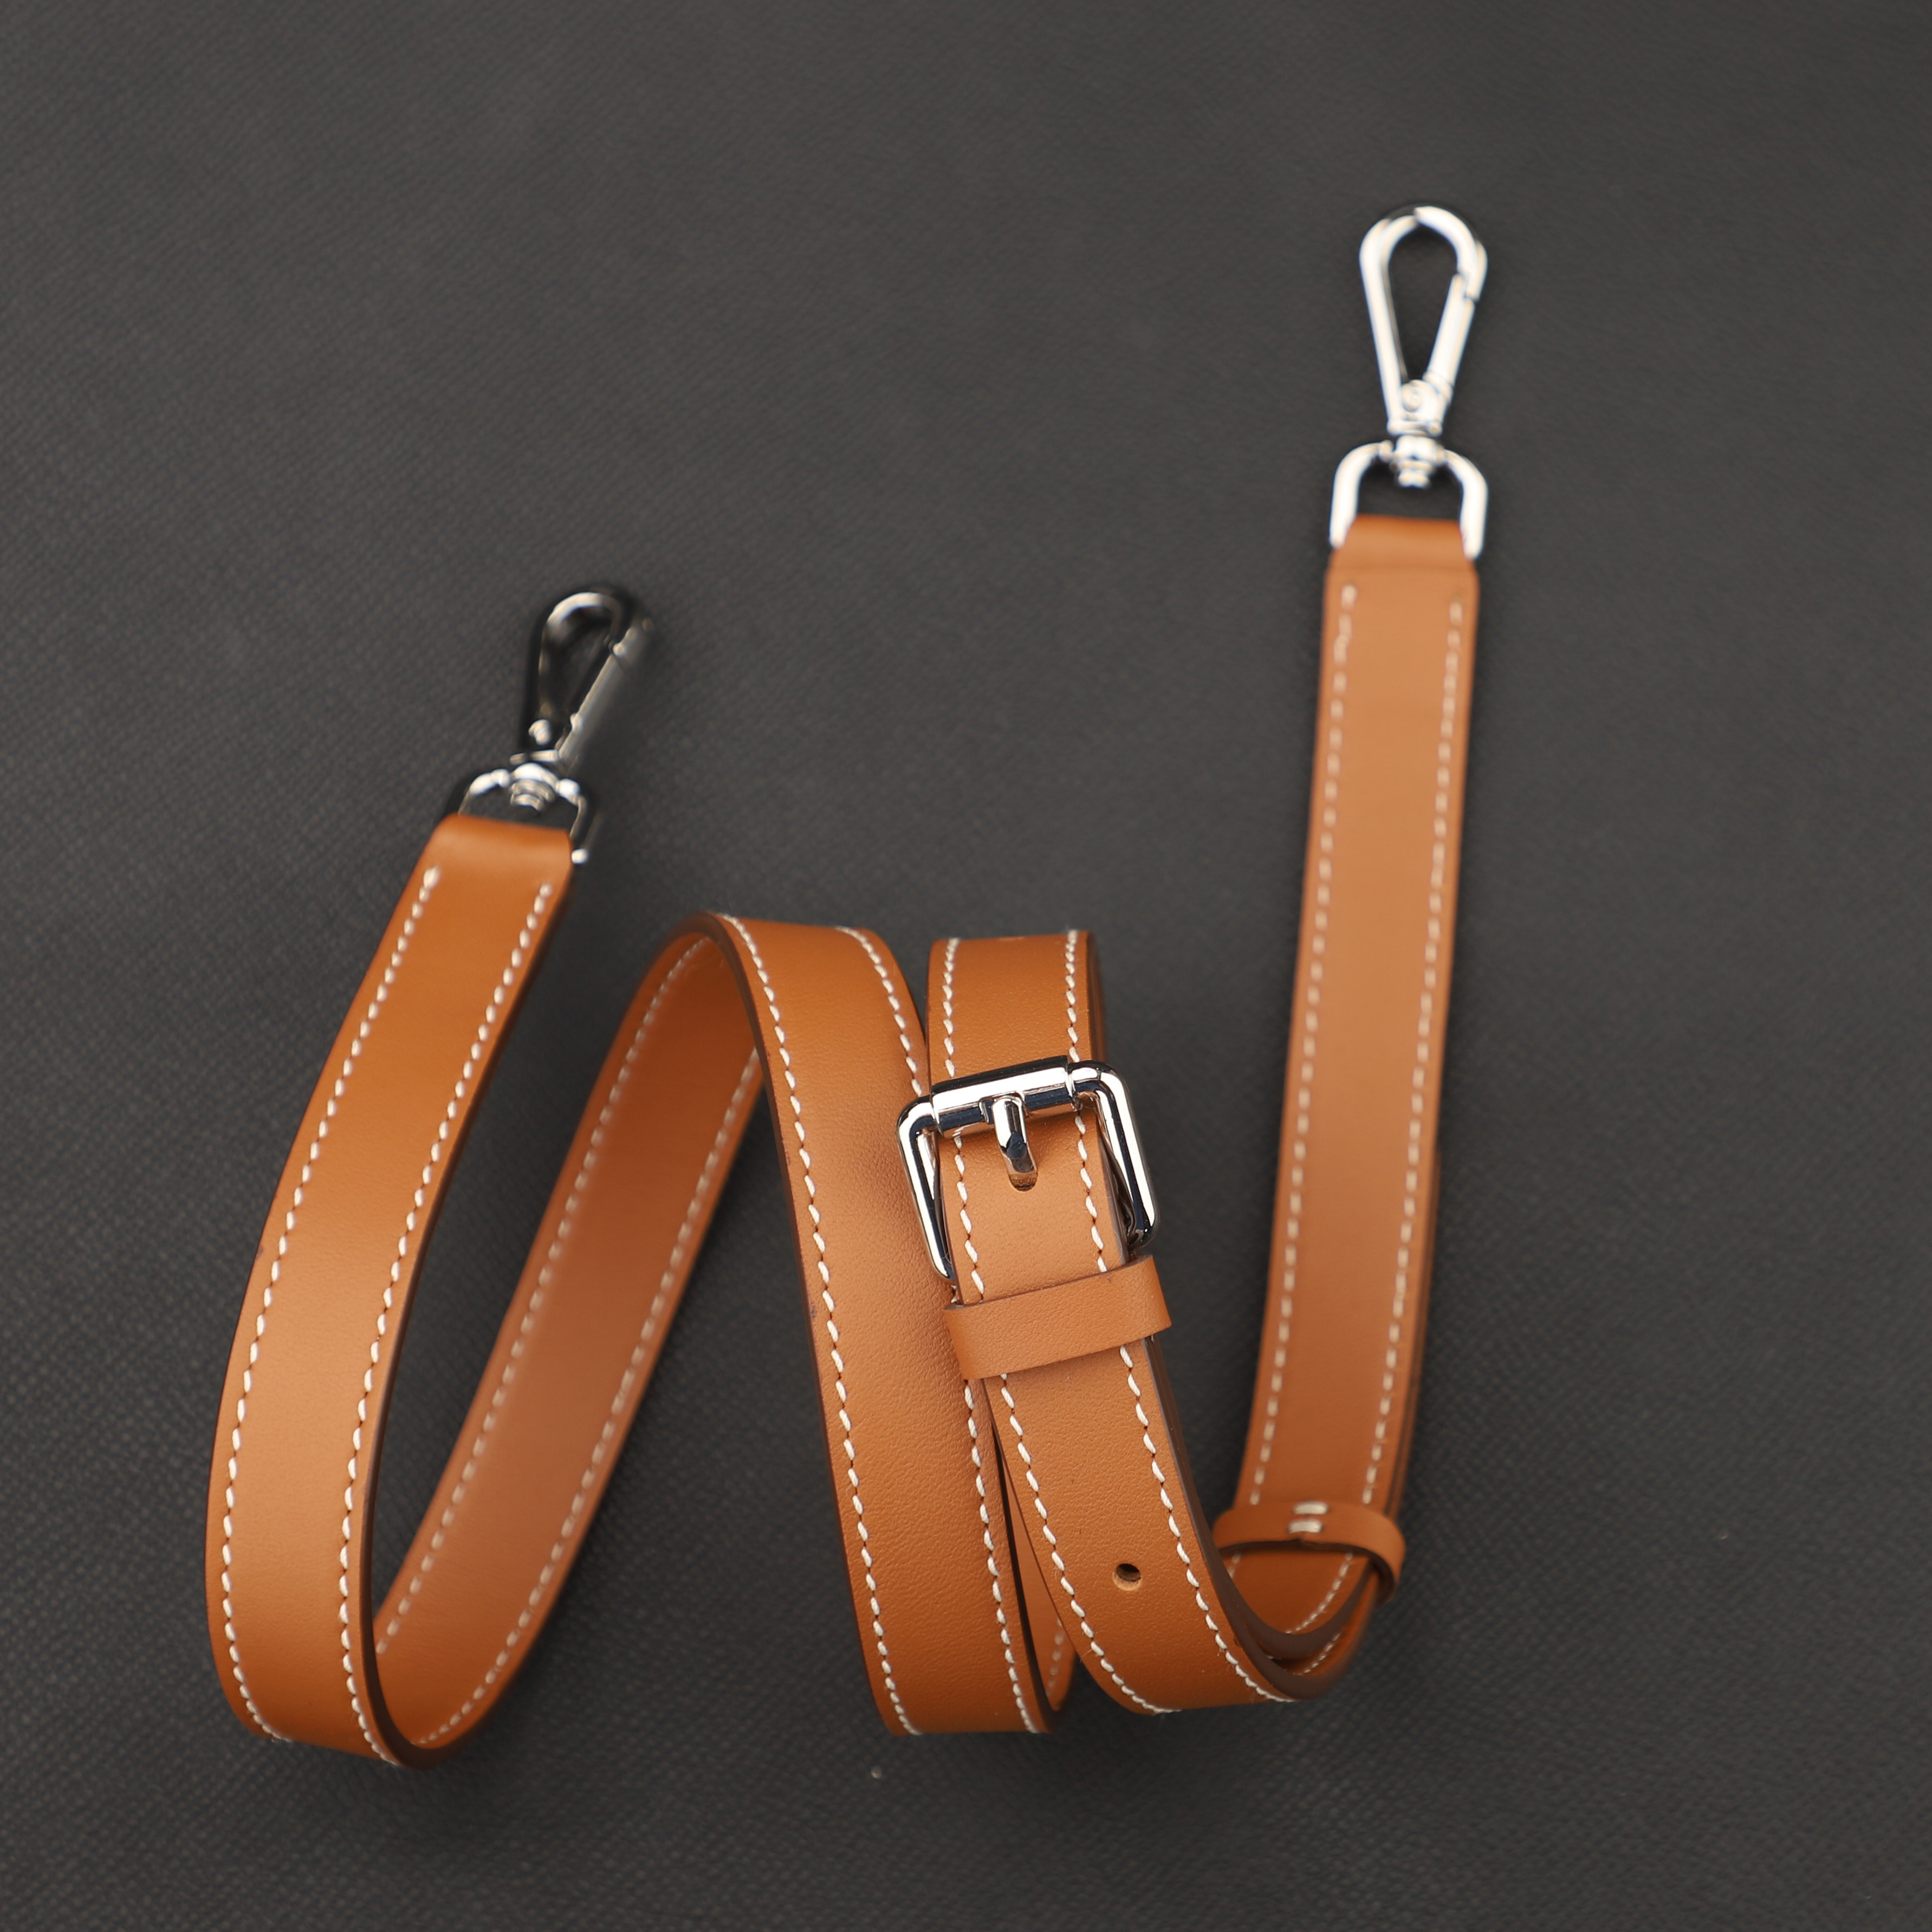 2cm Width Genuine Vachetta Leather Handbag Strap